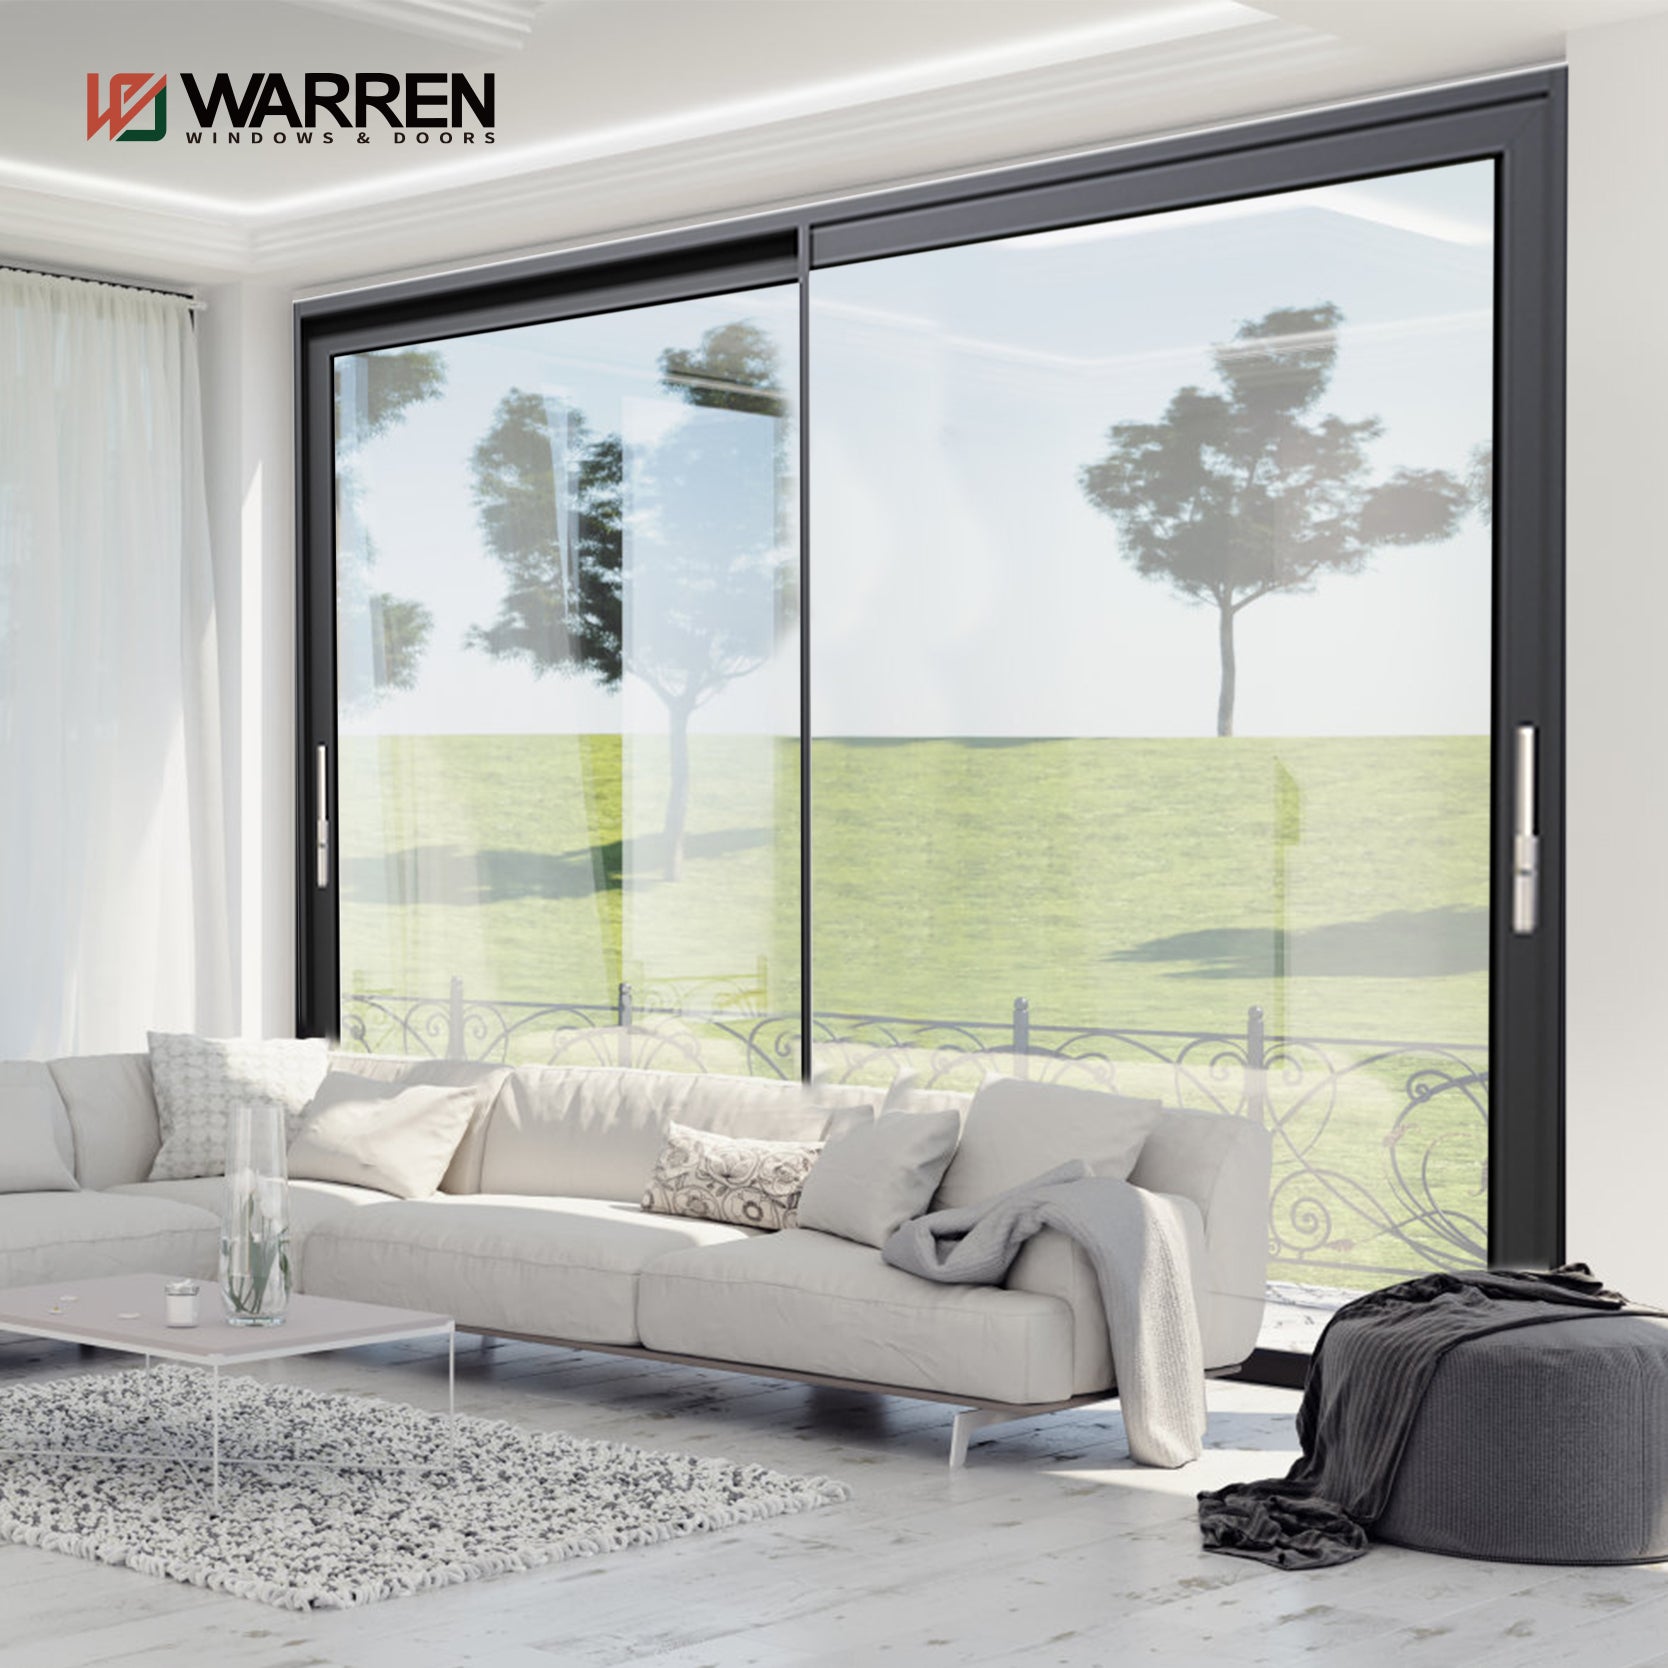 Warren New Style Hot Selling Aluminium Slim Sliding Doors And Windows Of Residential Villas